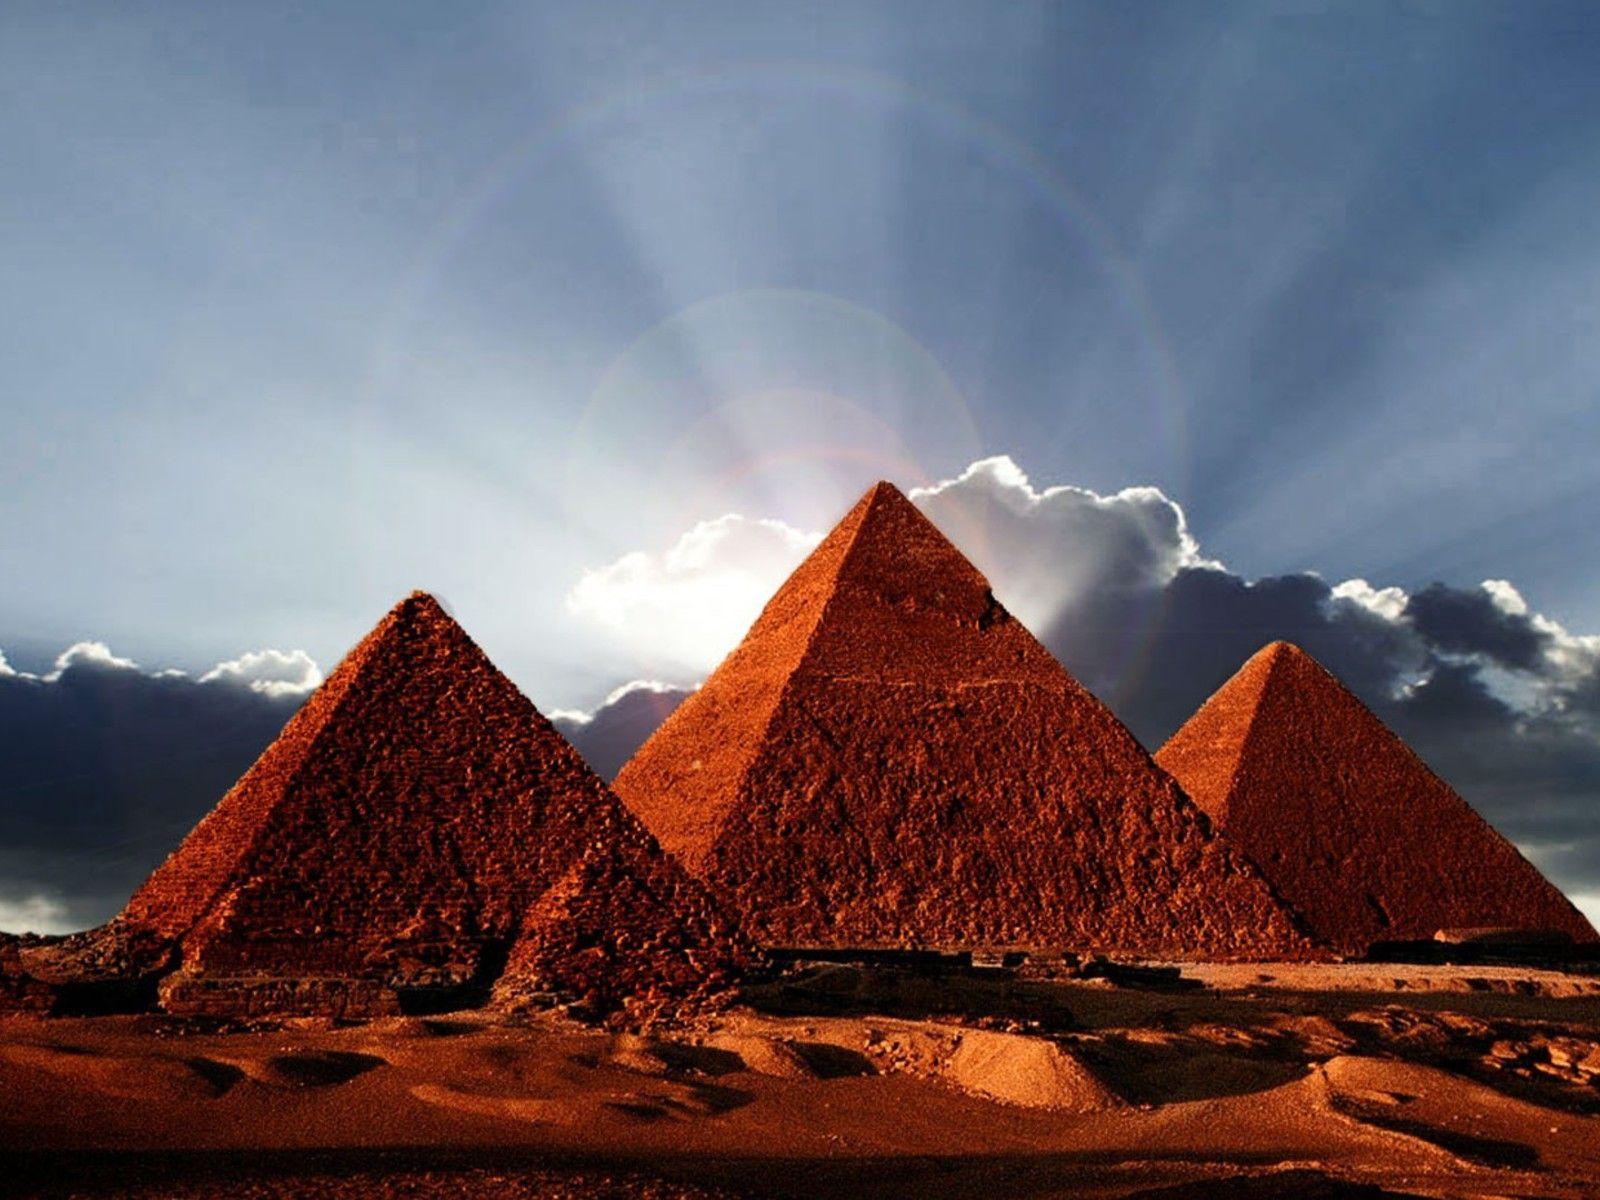 Pyramids of egypt wallpaper. PC